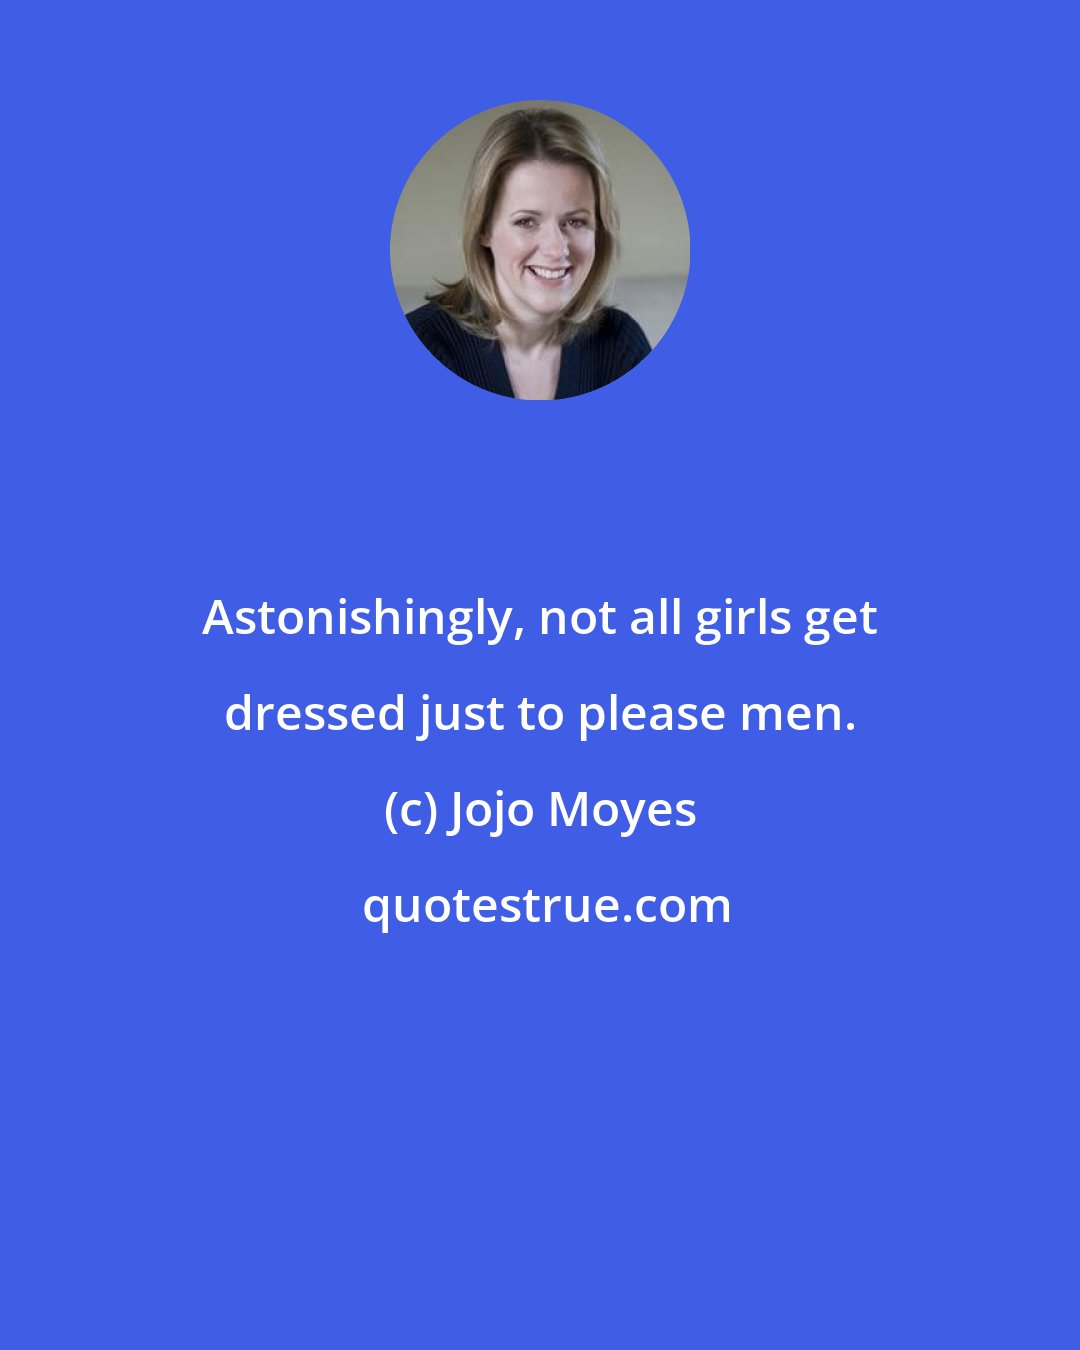 Jojo Moyes: Astonishingly, not all girls get dressed just to please men.